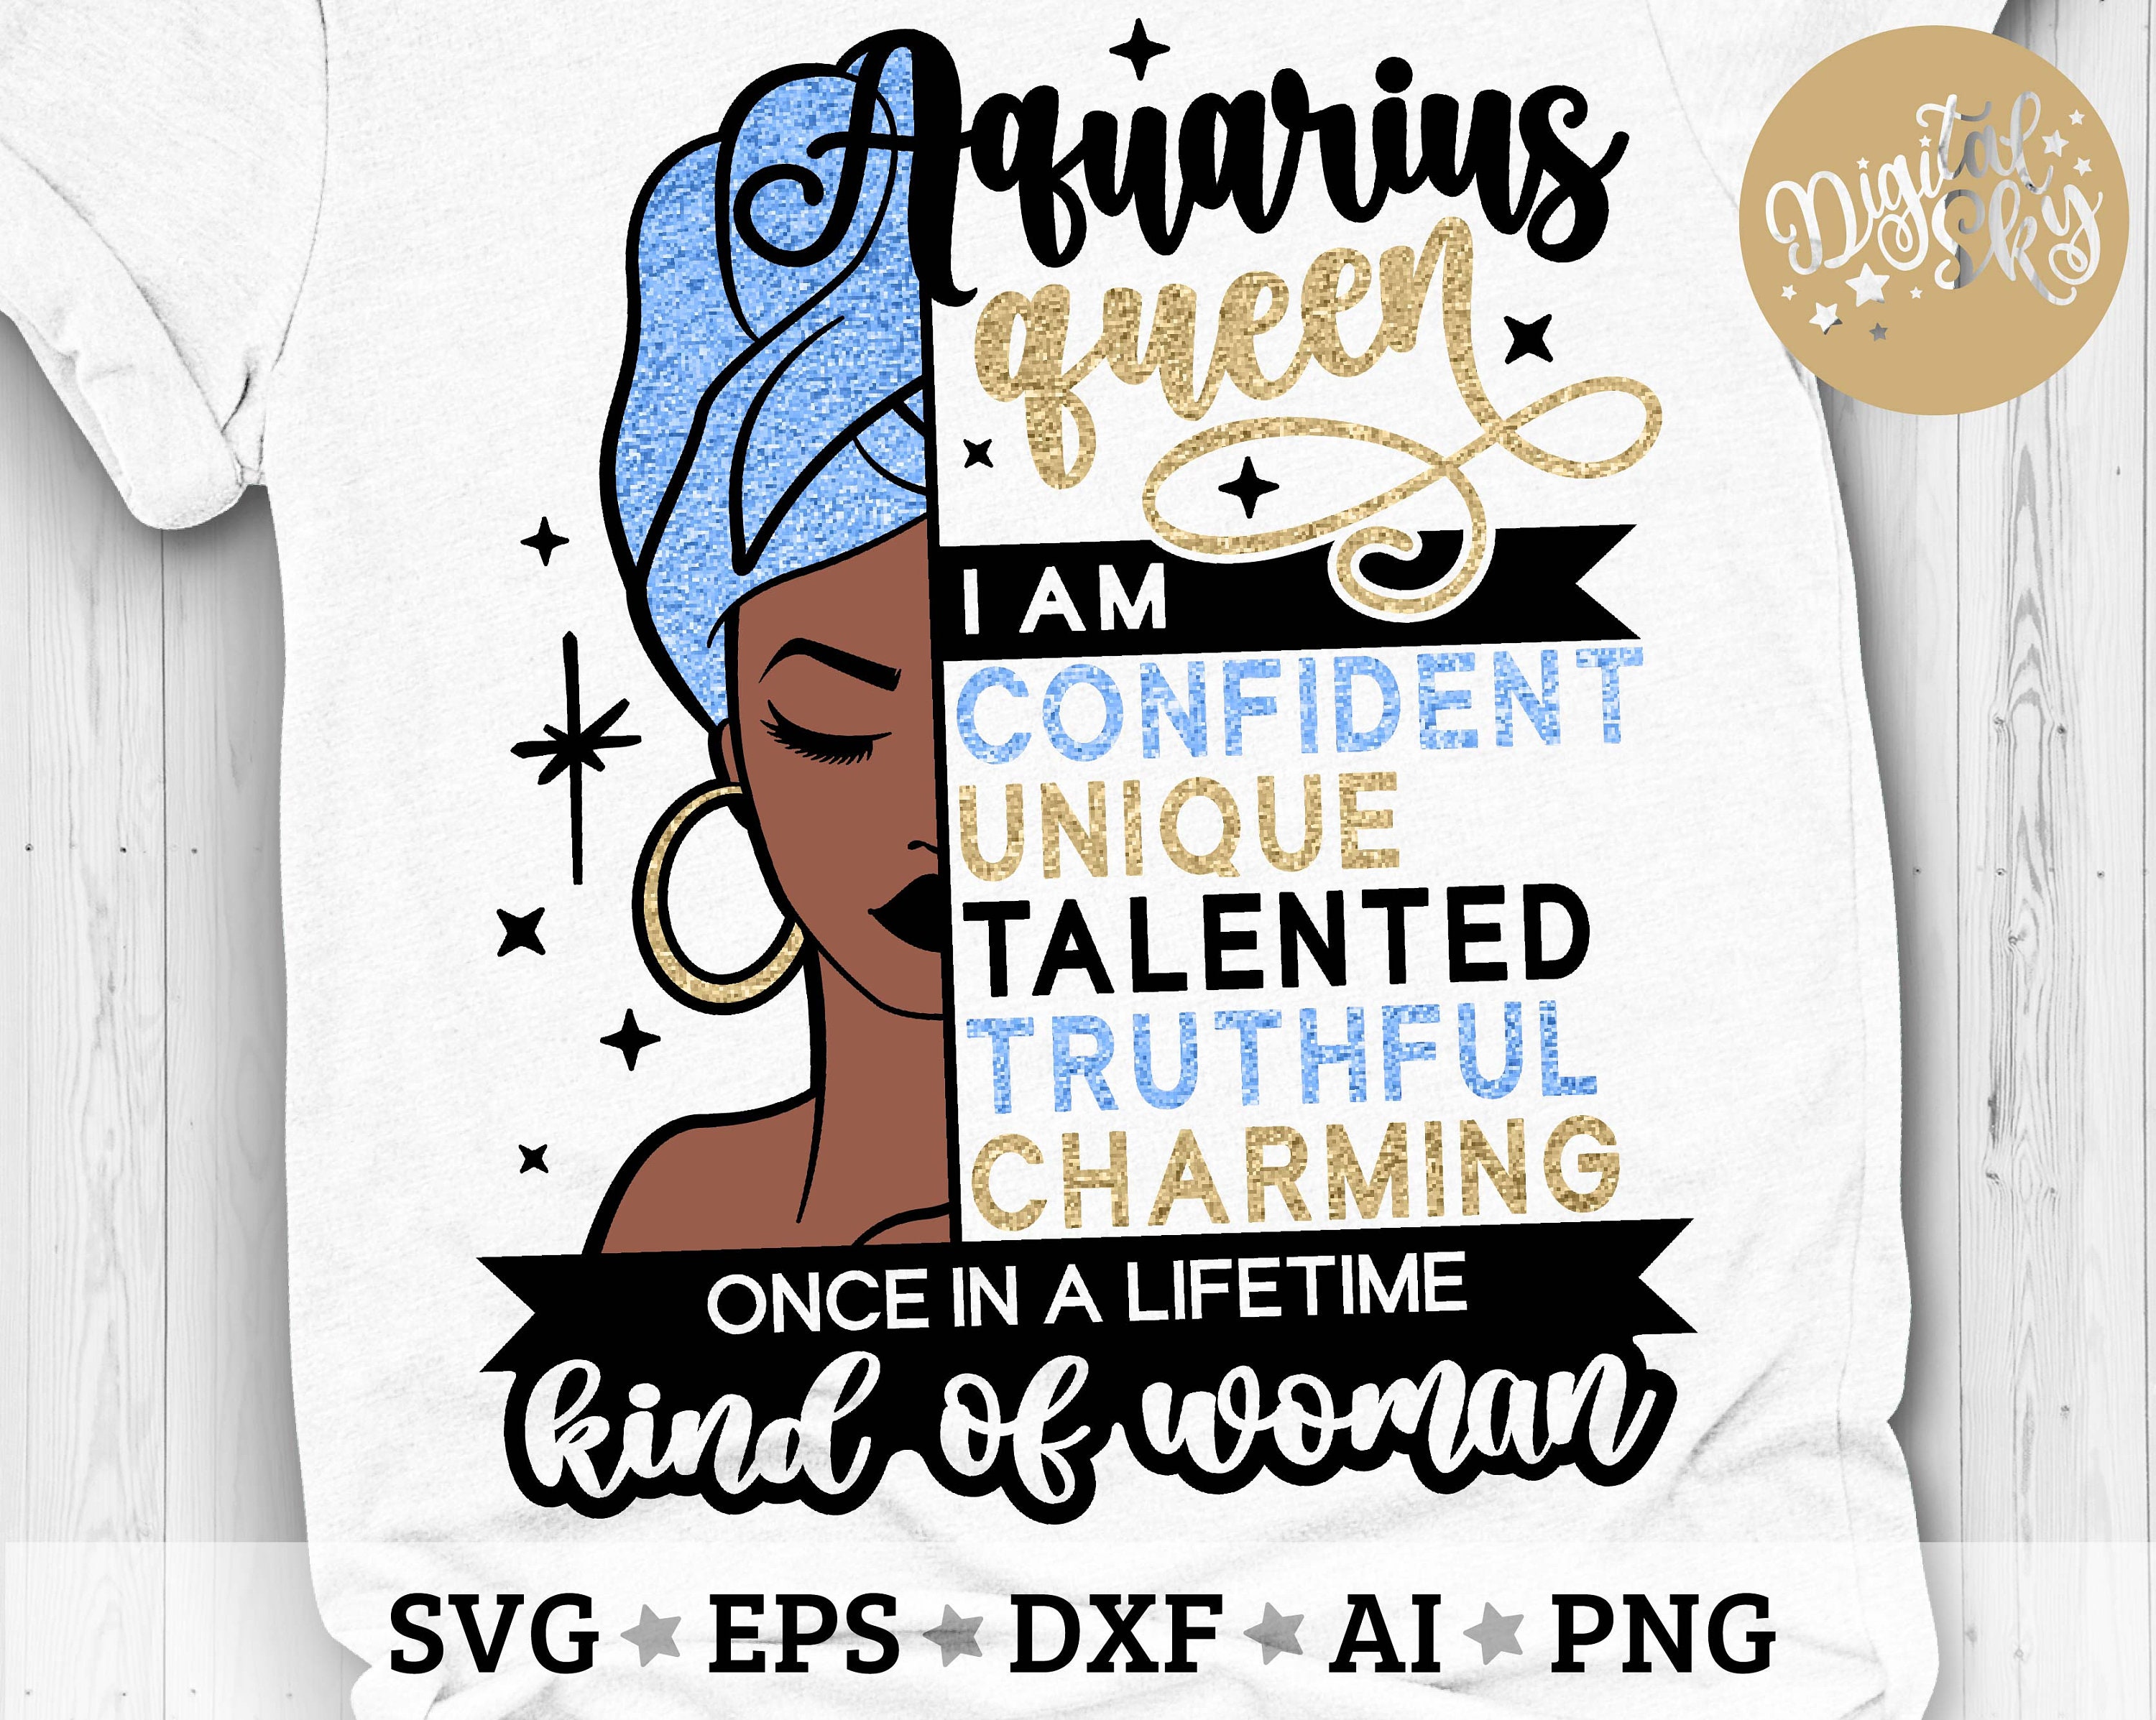 Download Aquarius Queen Svg Birthday Queen Svg Black Women Svg Afro | Etsy